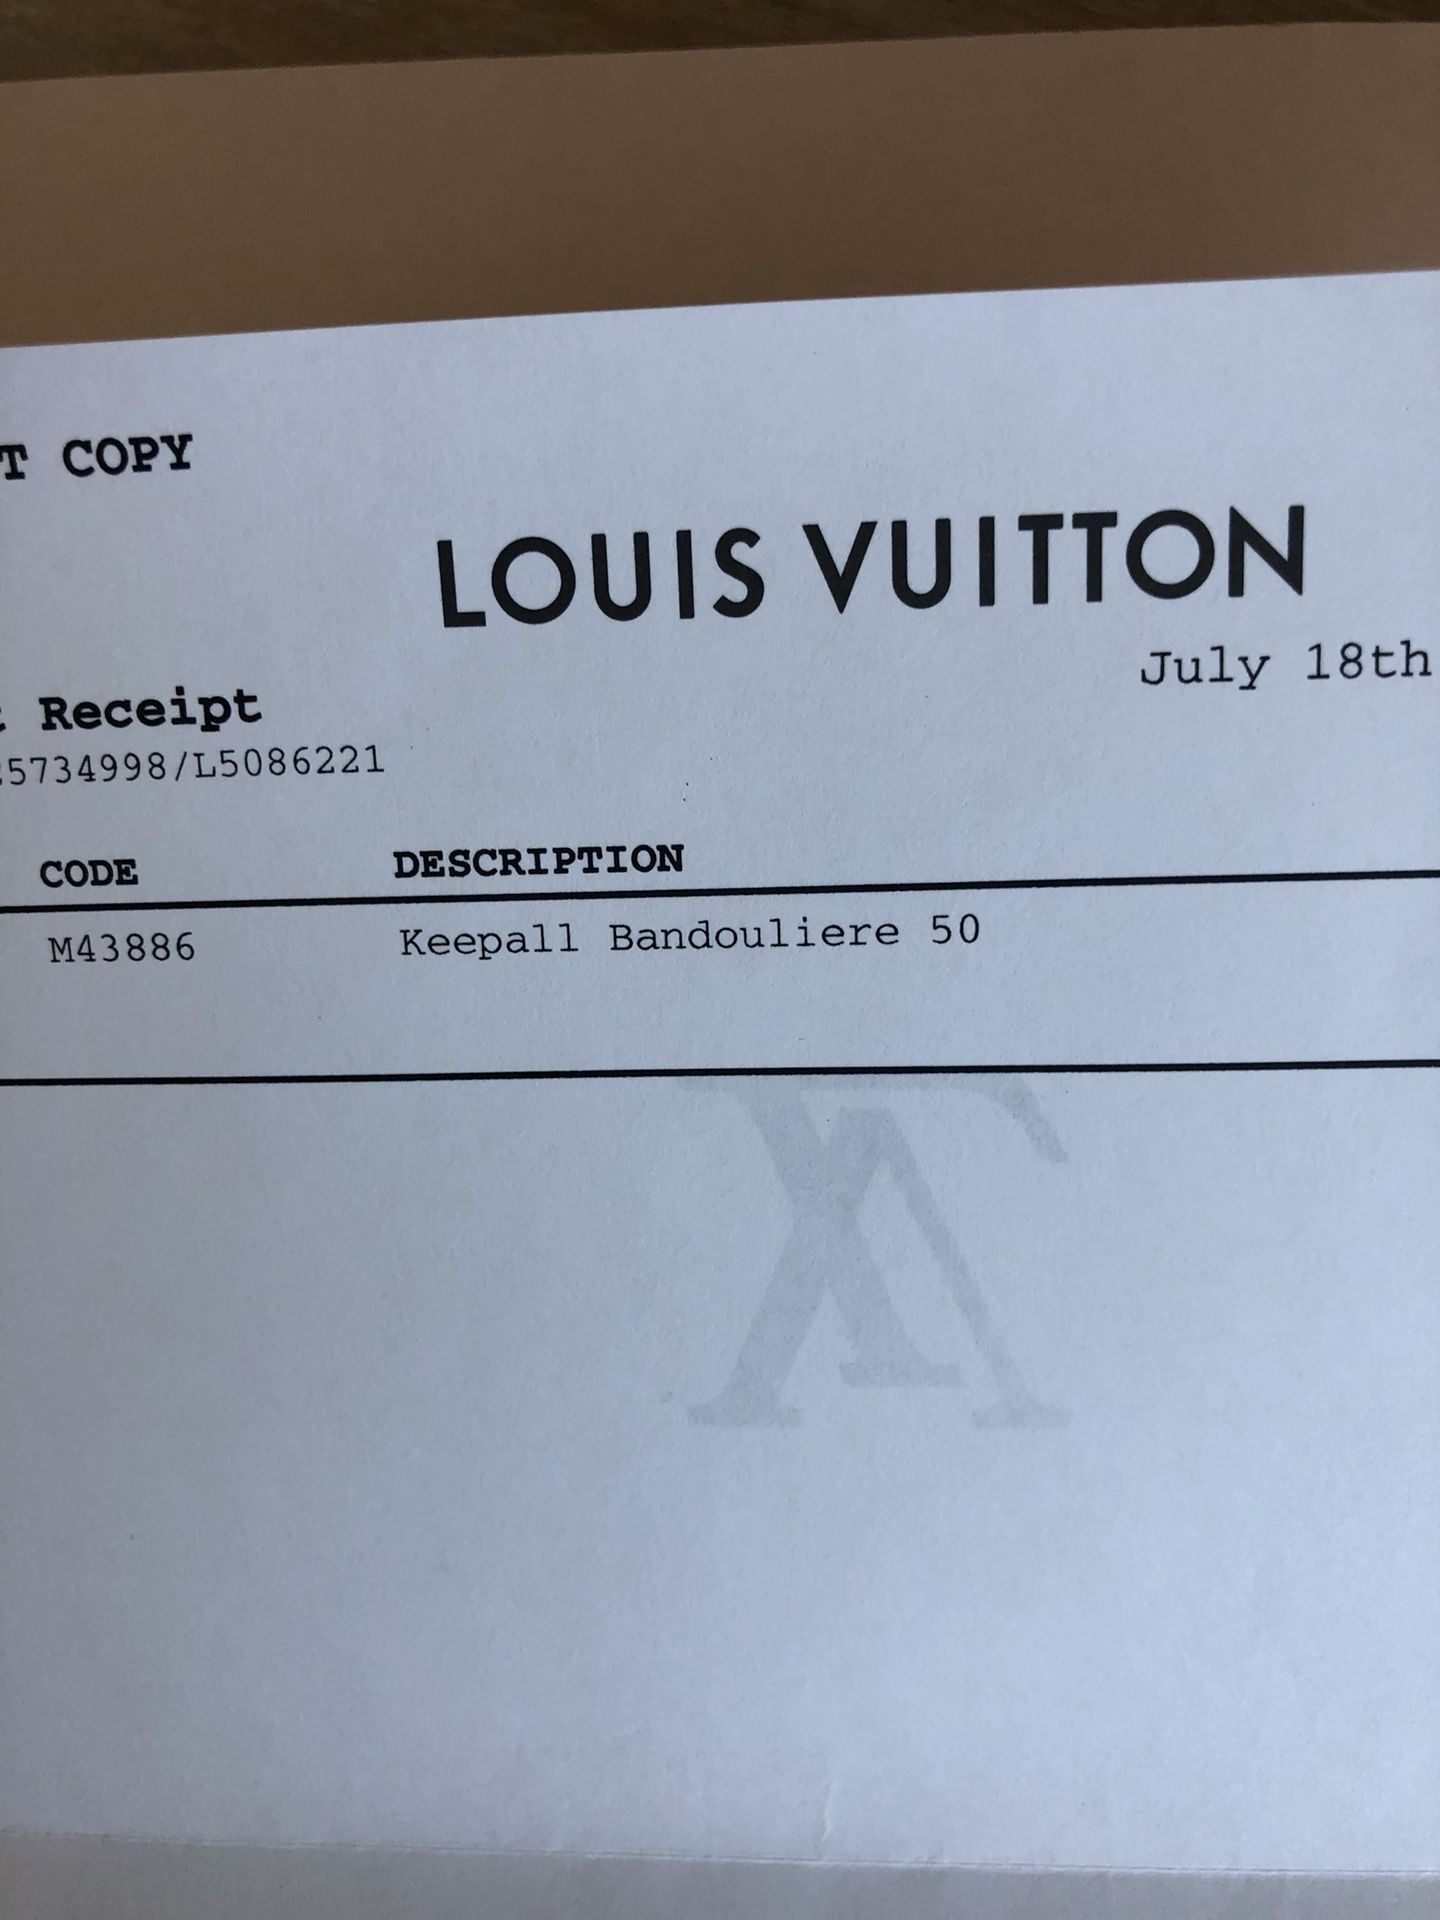 Bags Briefcases Louis Vuitton Louis Vuitton Keepall 50 Titanium Kim Jones